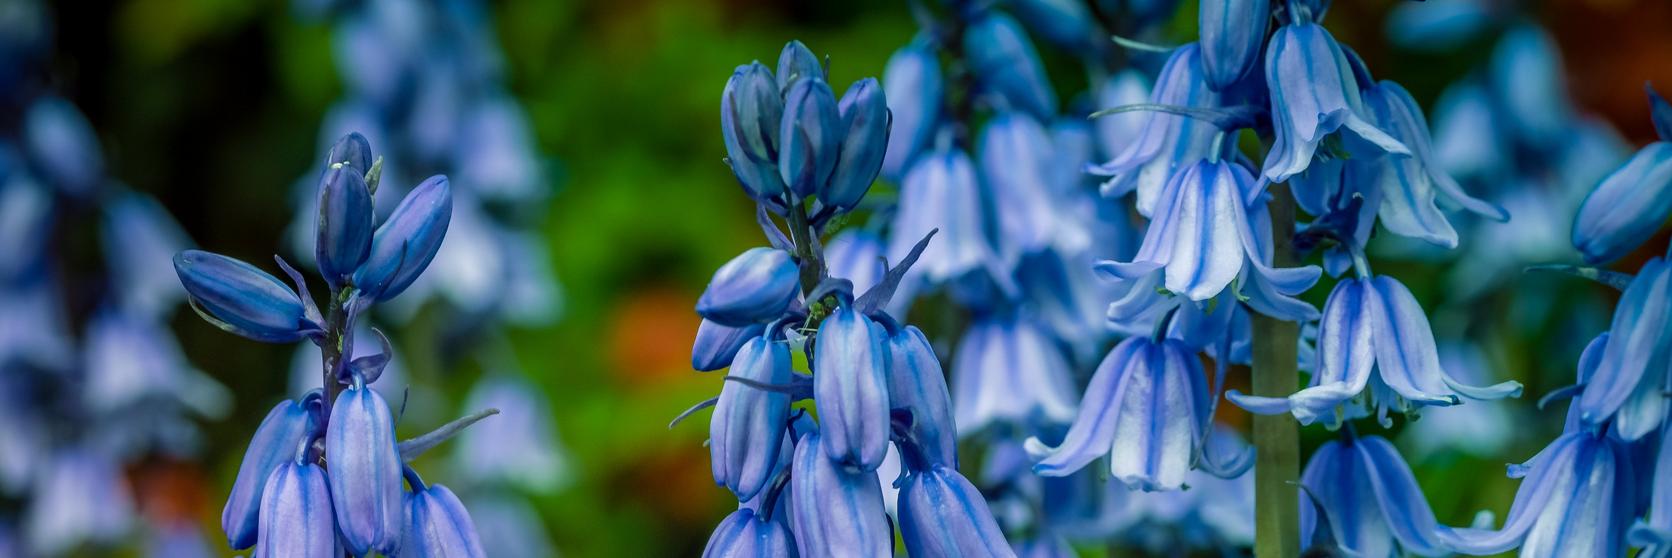 bluebell-blue-flowers